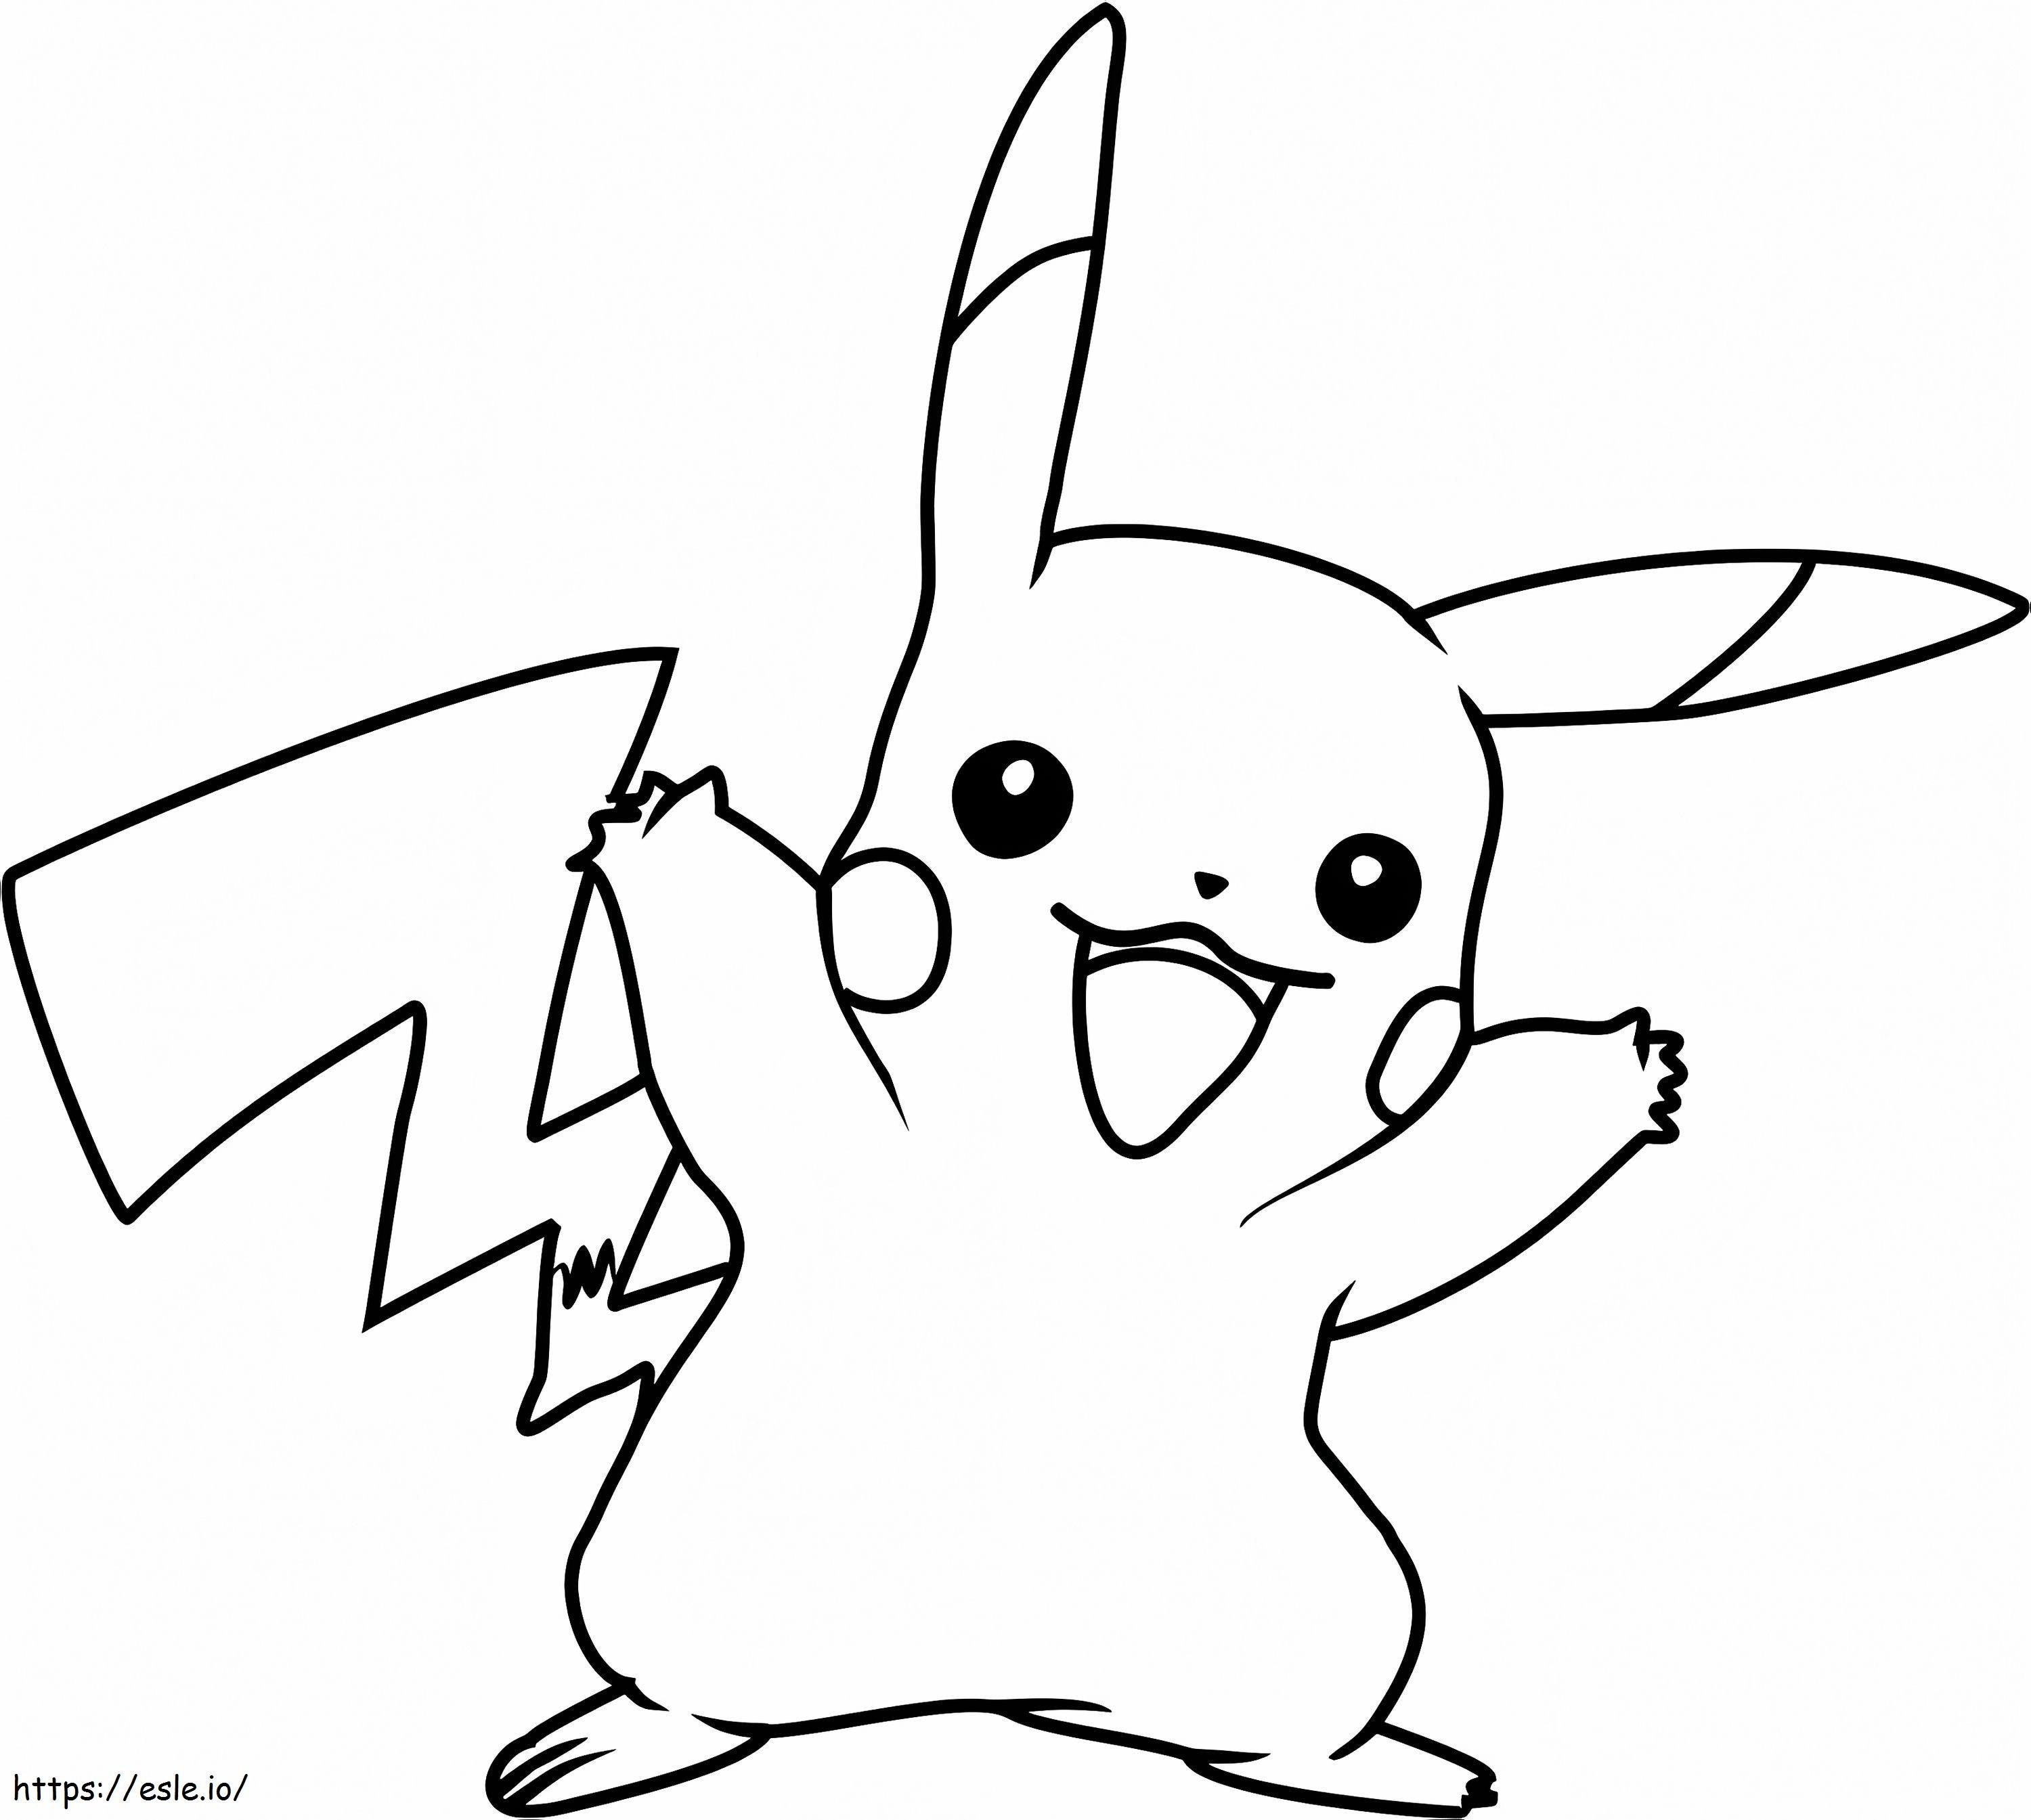 1530669716 Pikachu Pokemon A4 ausmalbilder